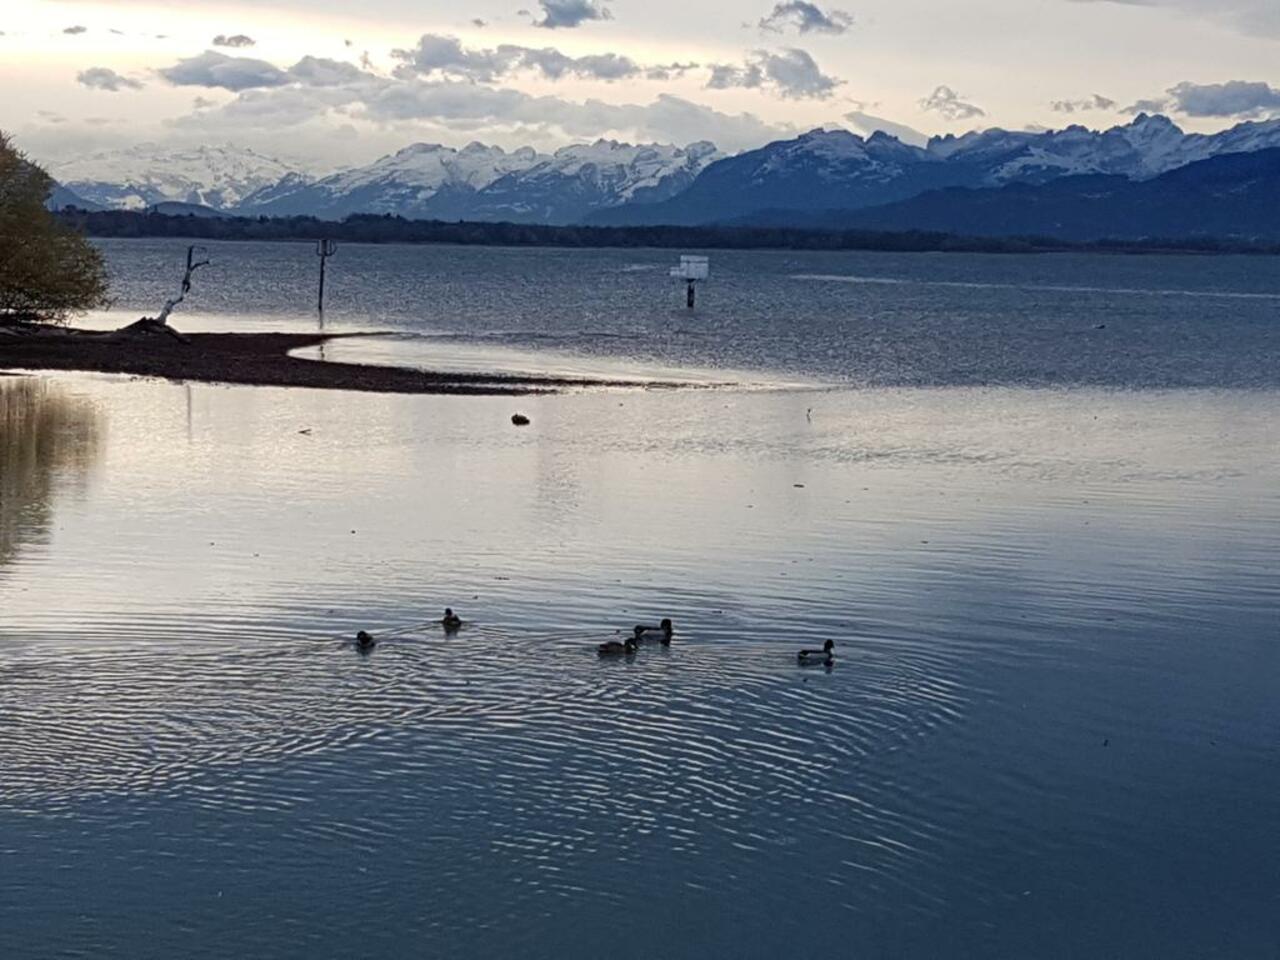 Dem Abend entgegen segeln #Bodensee #Lindau #Leiblachmündung https://t.co/88mfoZjB36